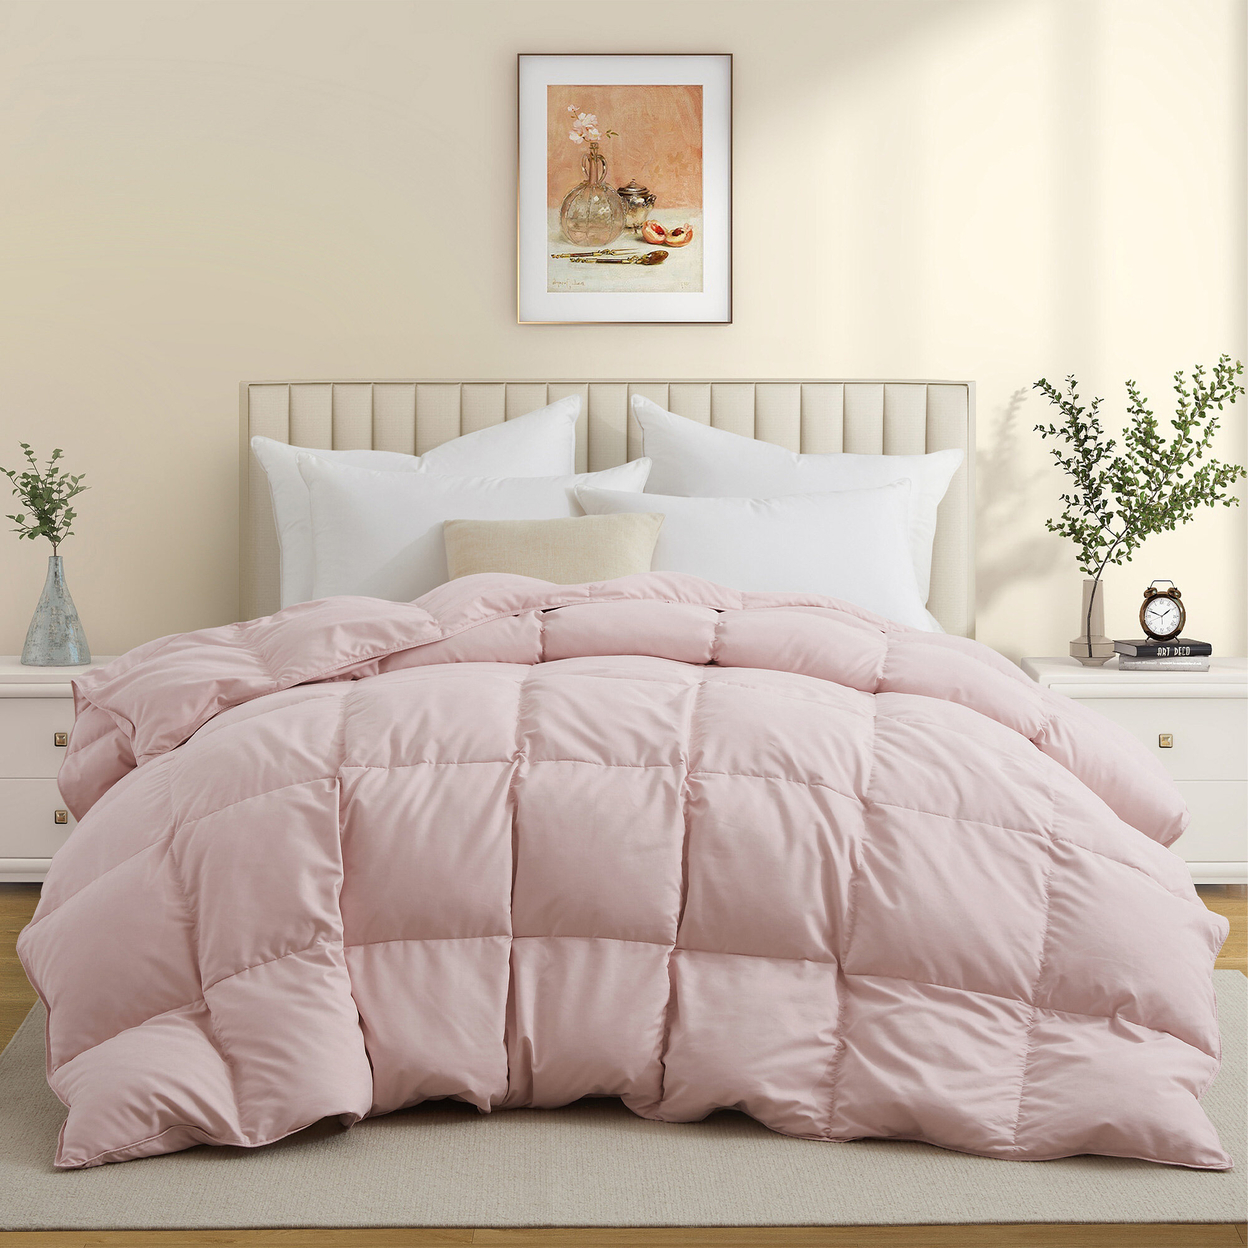 Premium All Seasons White Goose Feather Fiber And Down Comforter - Lotus Pink, King